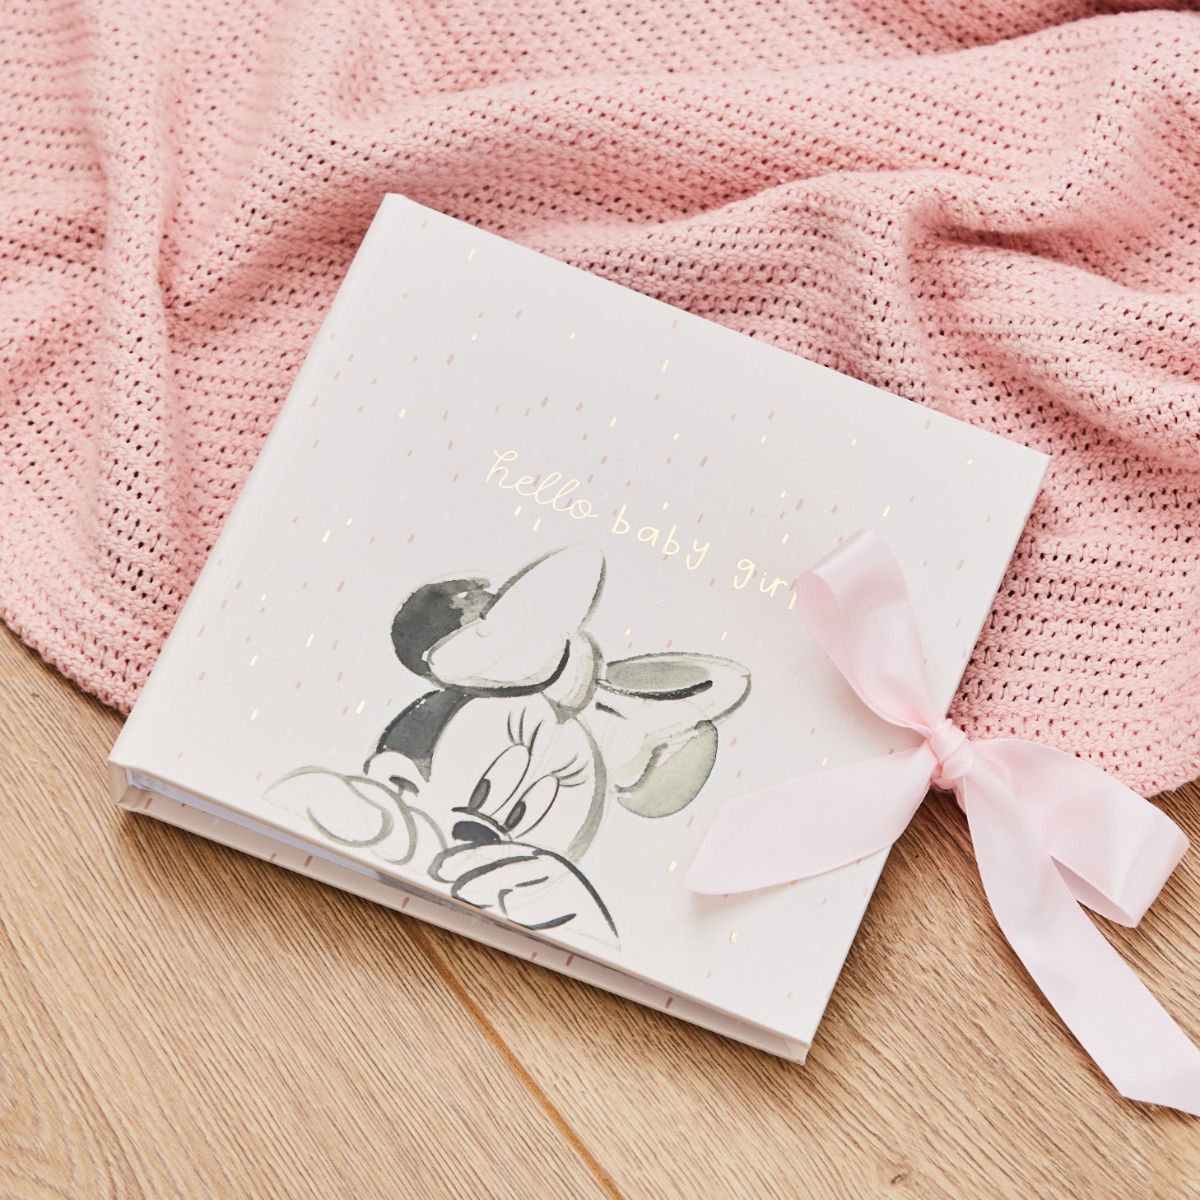 Personalised Minnie Mouse Photo Album